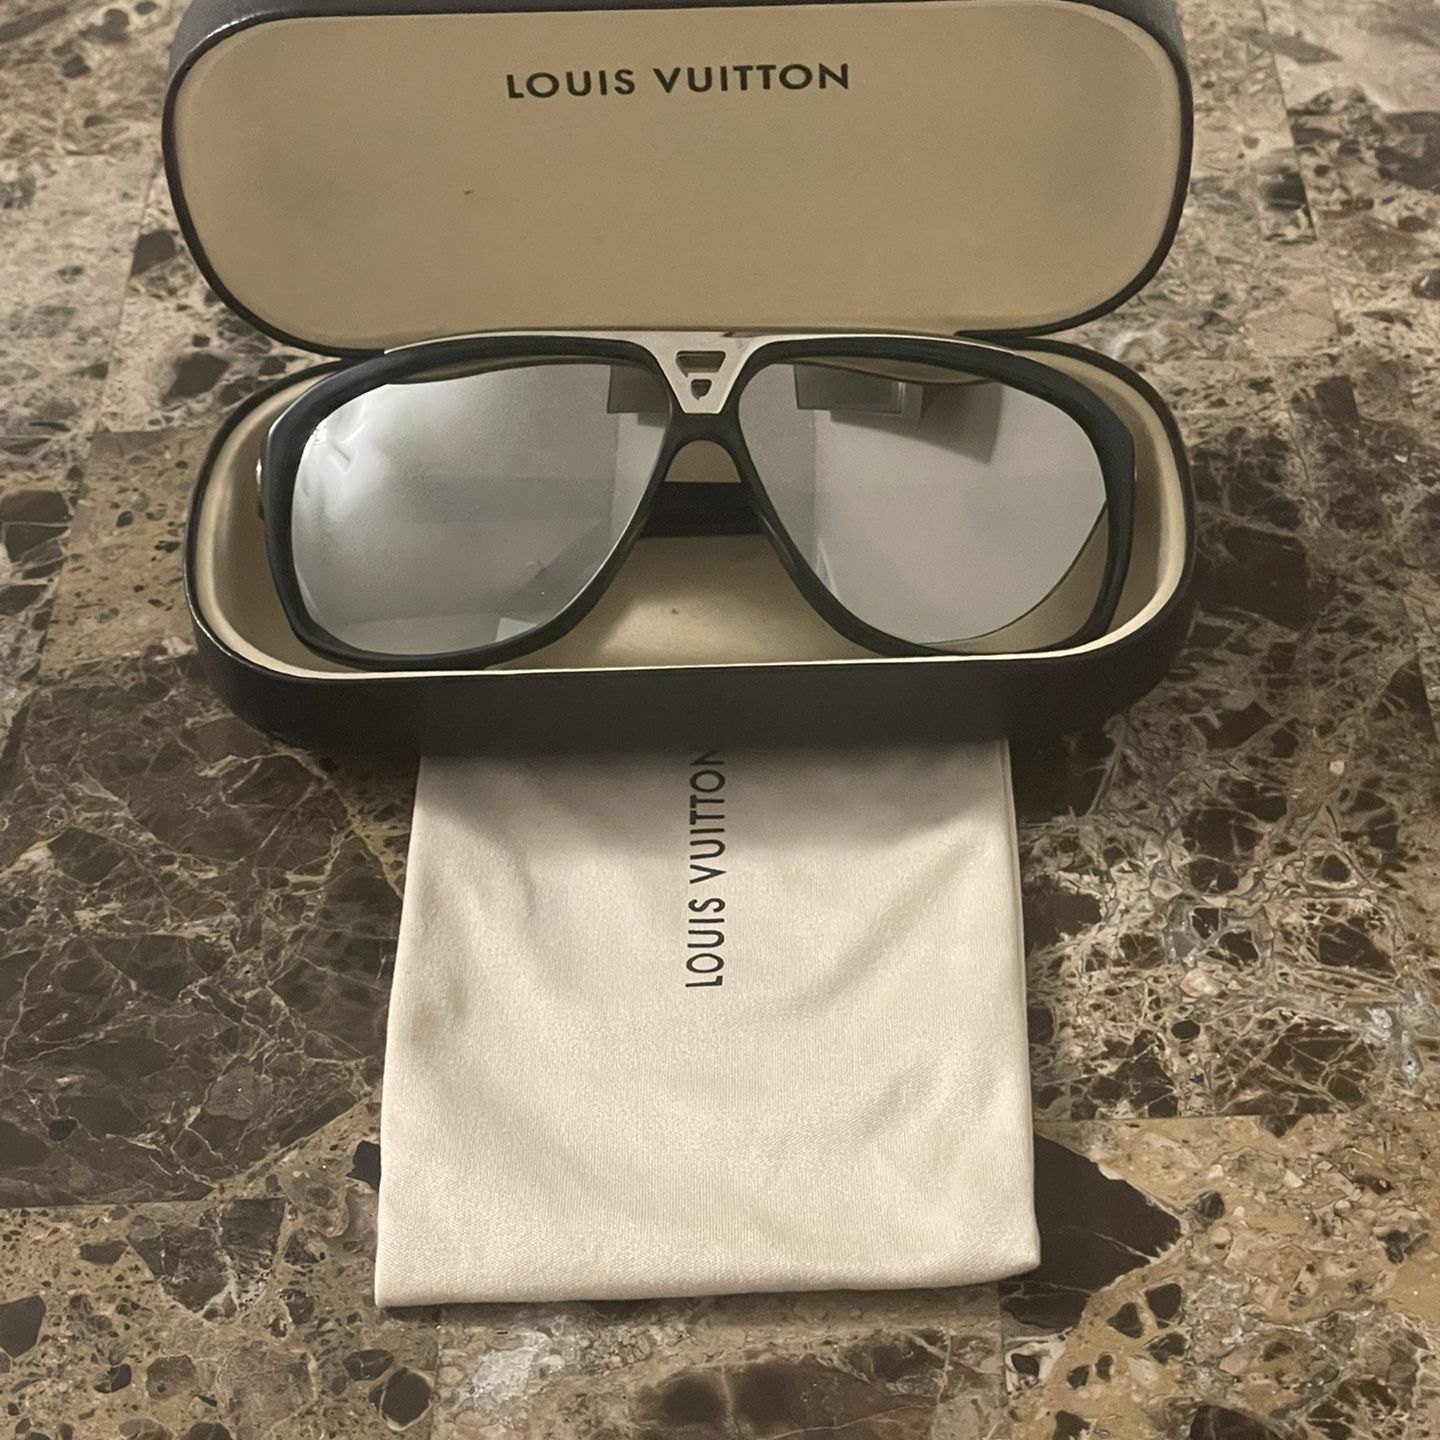 Louis Vuitton : Louis Vuitton Evidence Black